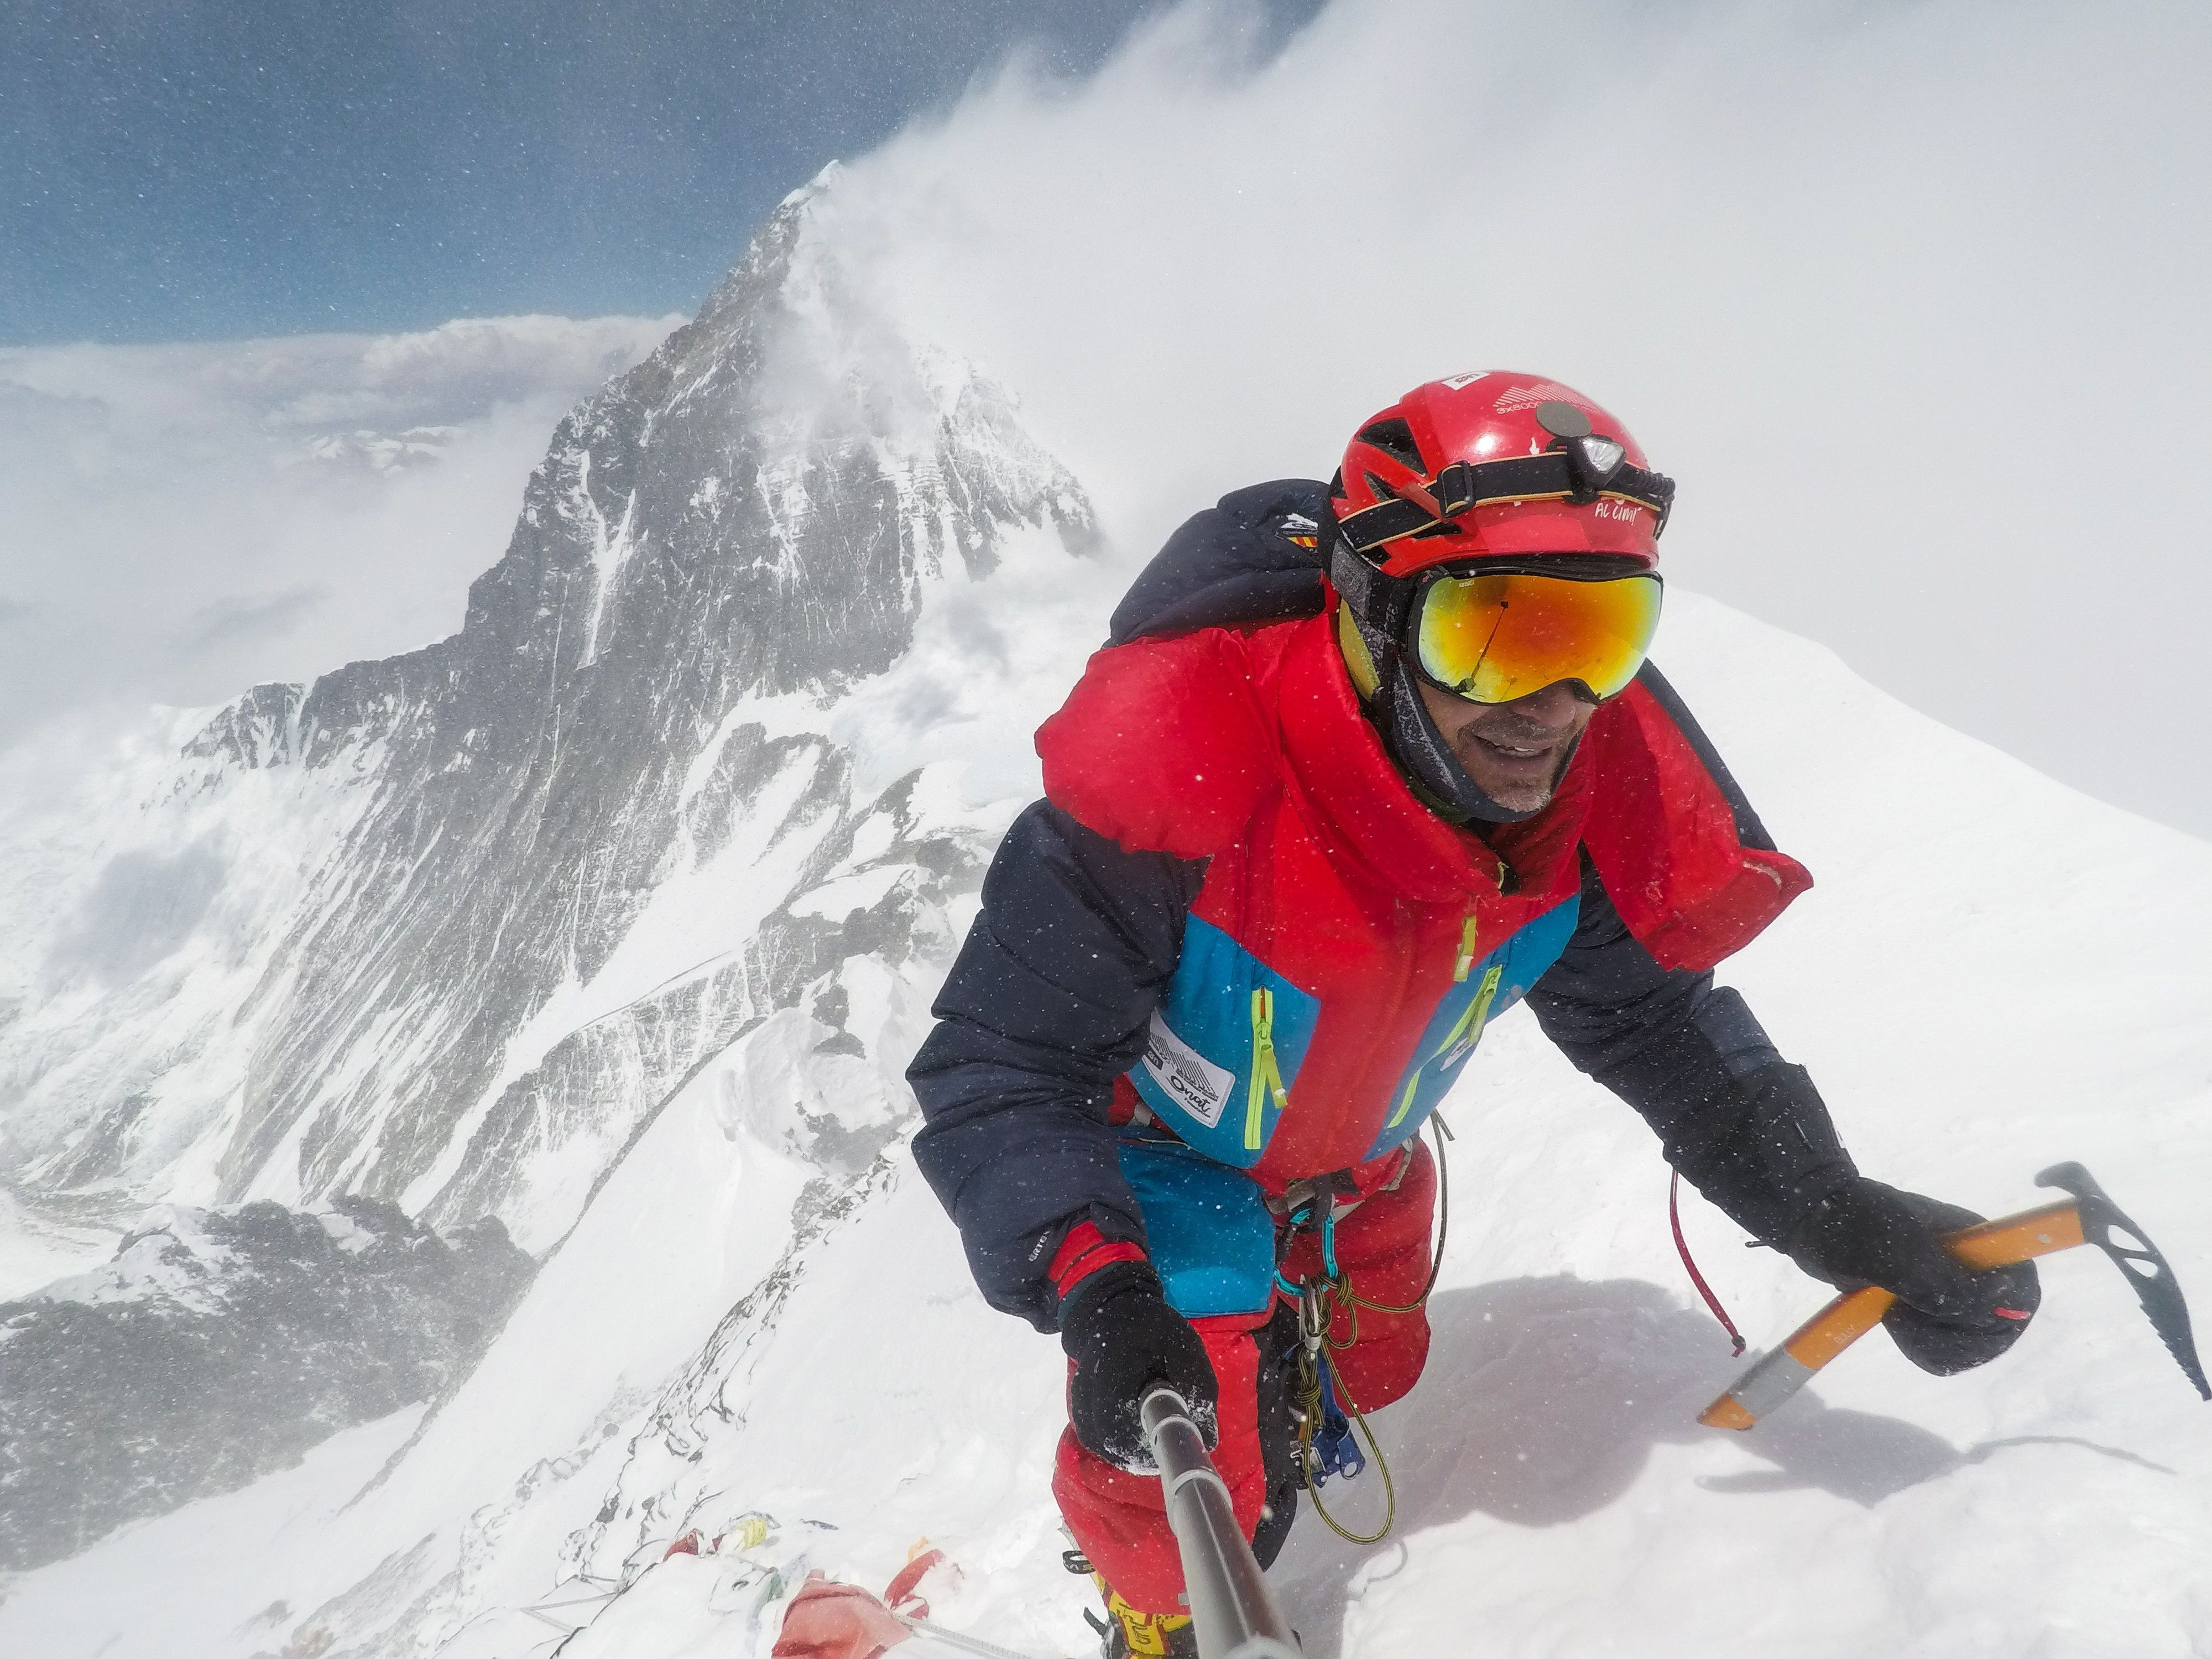 Sergi Mingote realizando la subida de una montaña antes de su muerte / ARCHIVO